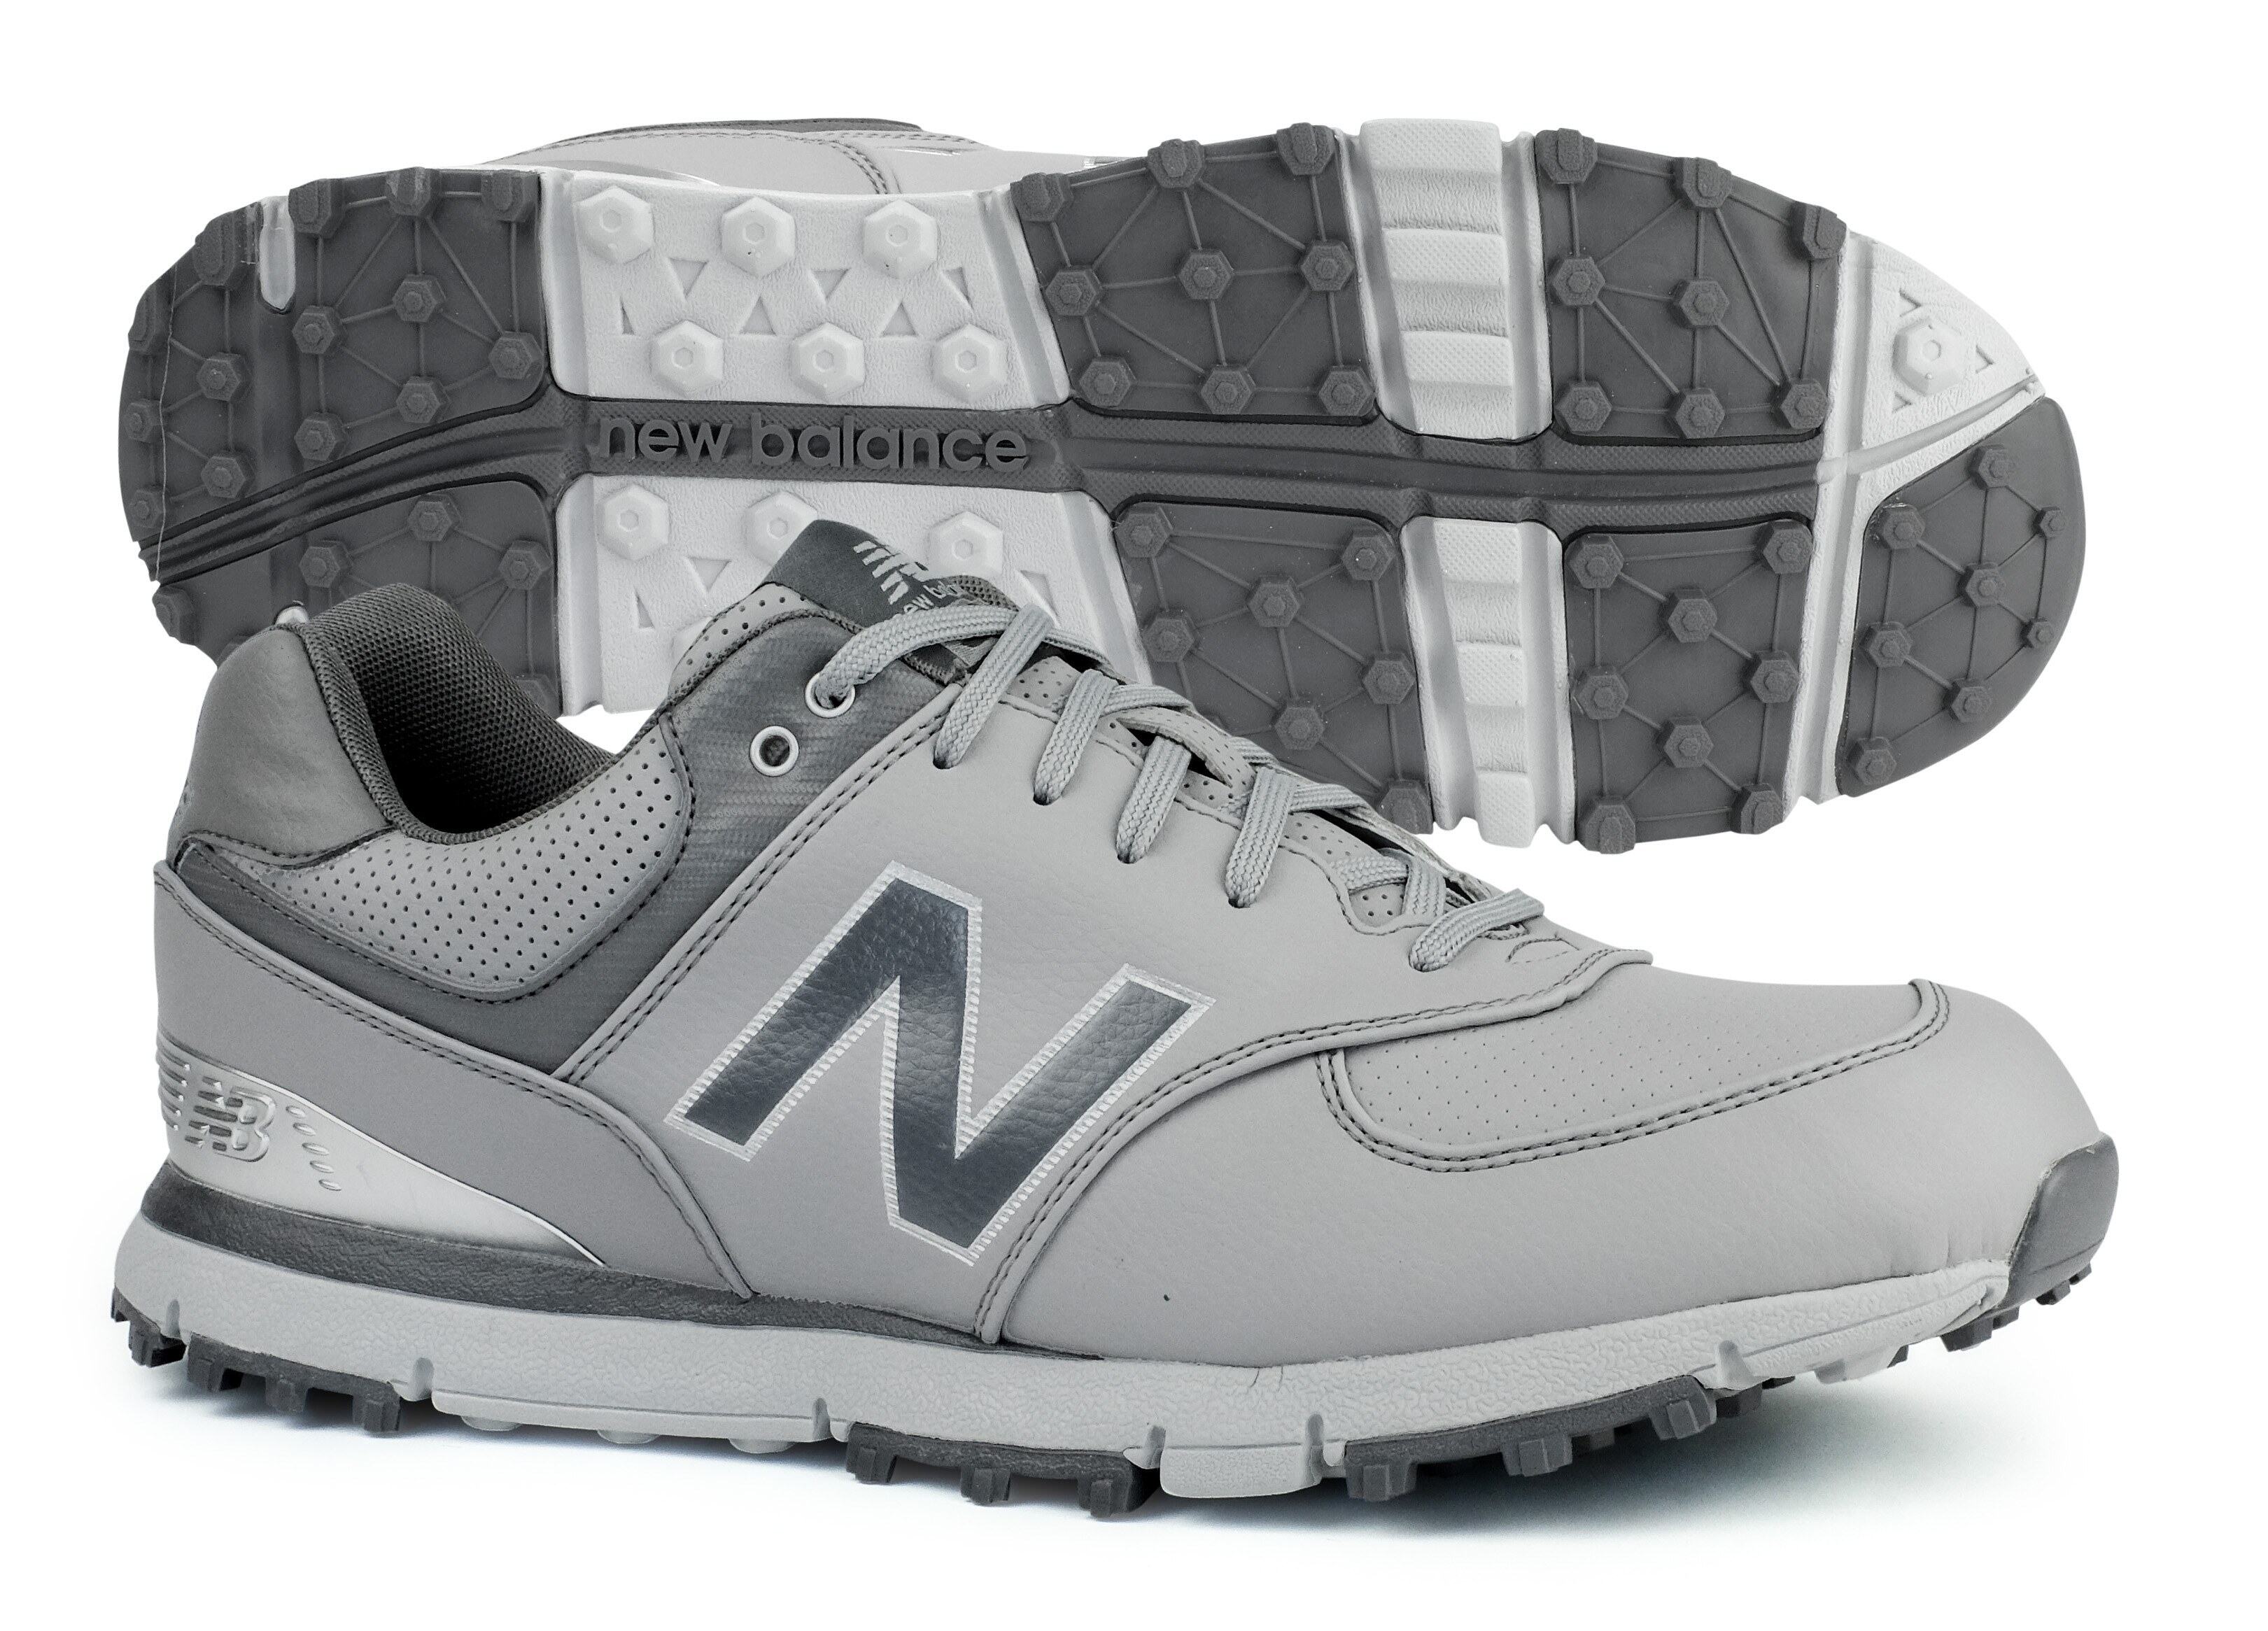 new balance nbg1701 spiked golf shoe